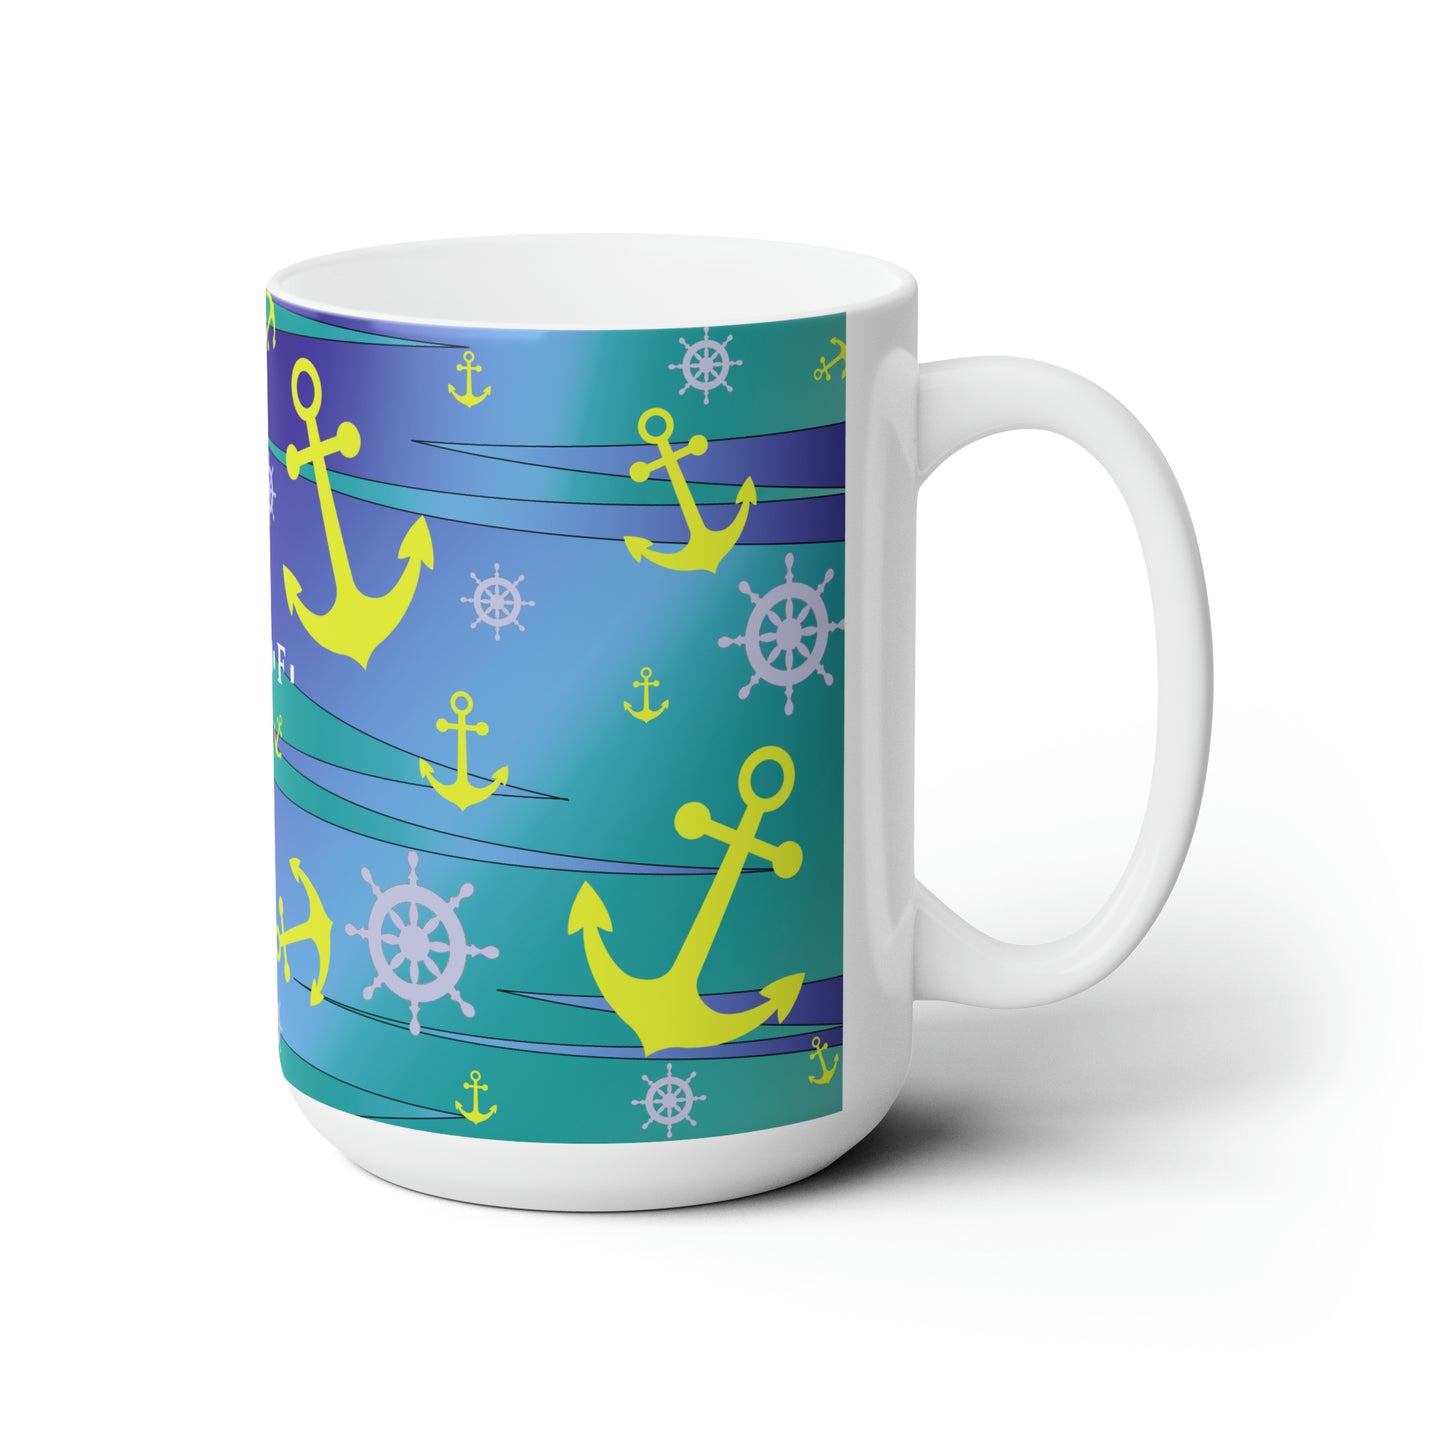 Anchors Away - Ceramic Mug 15oz